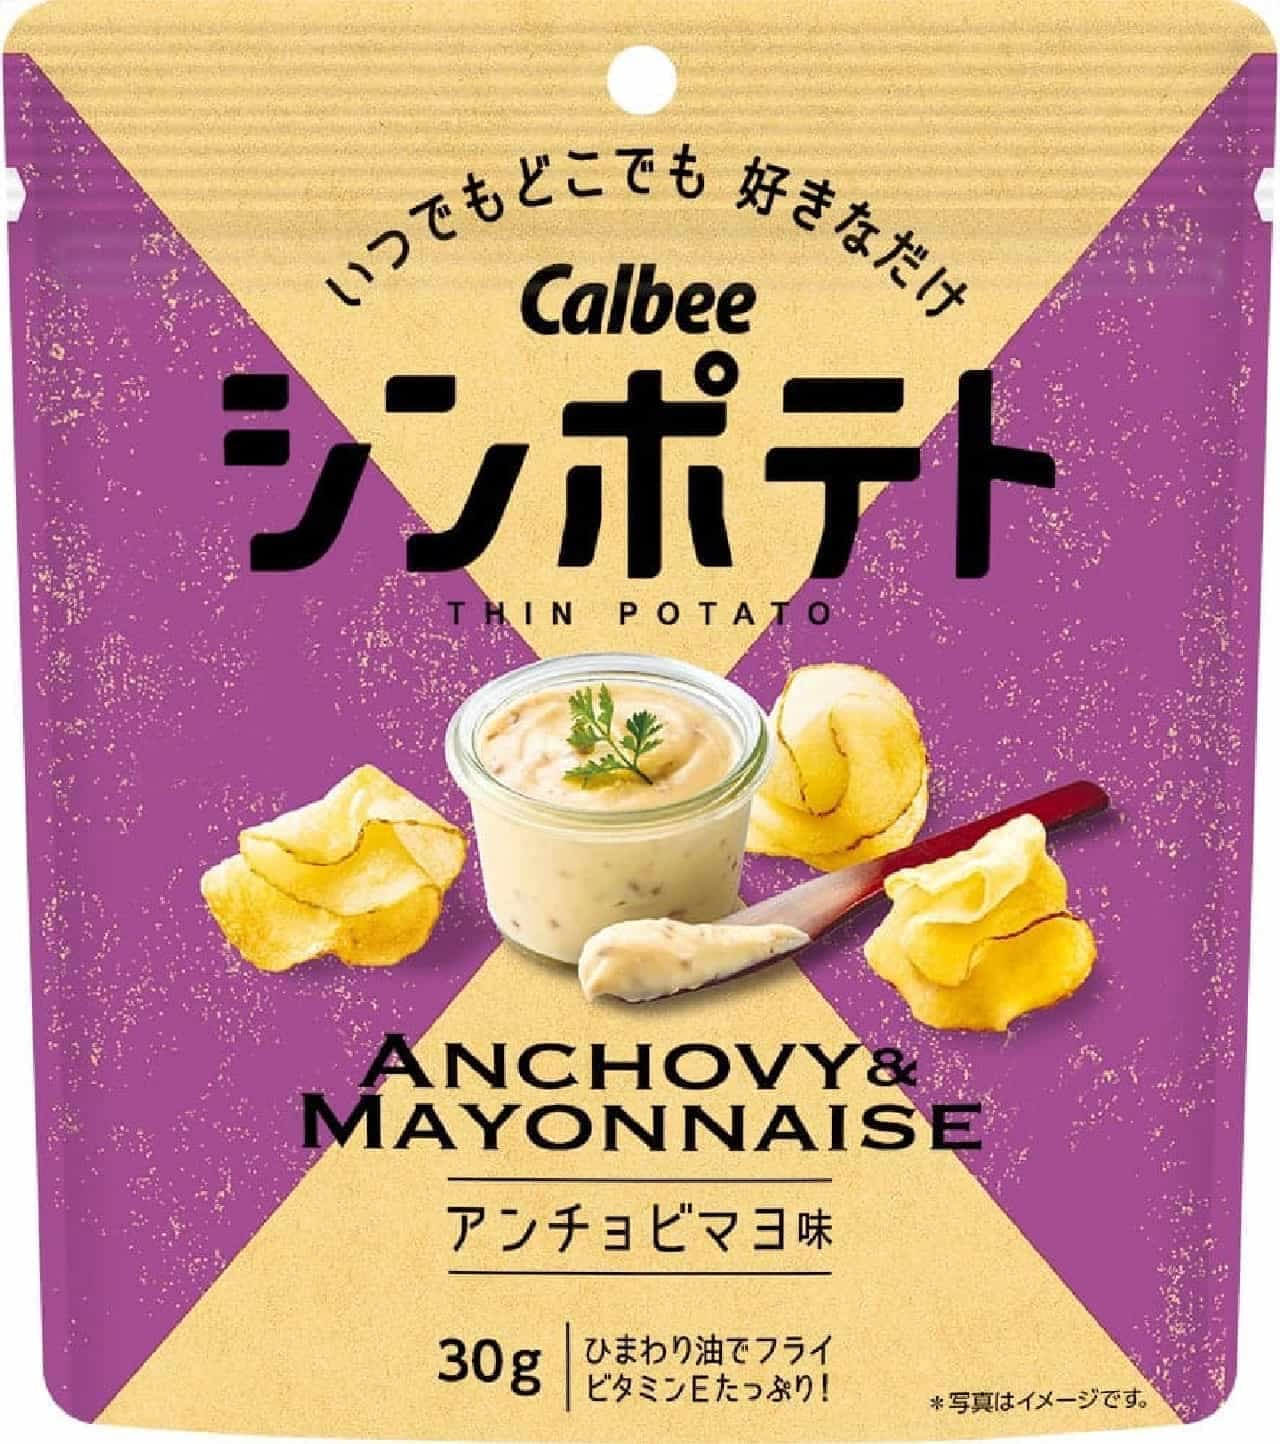 Shin Potato Anchovy Mayo Flavor